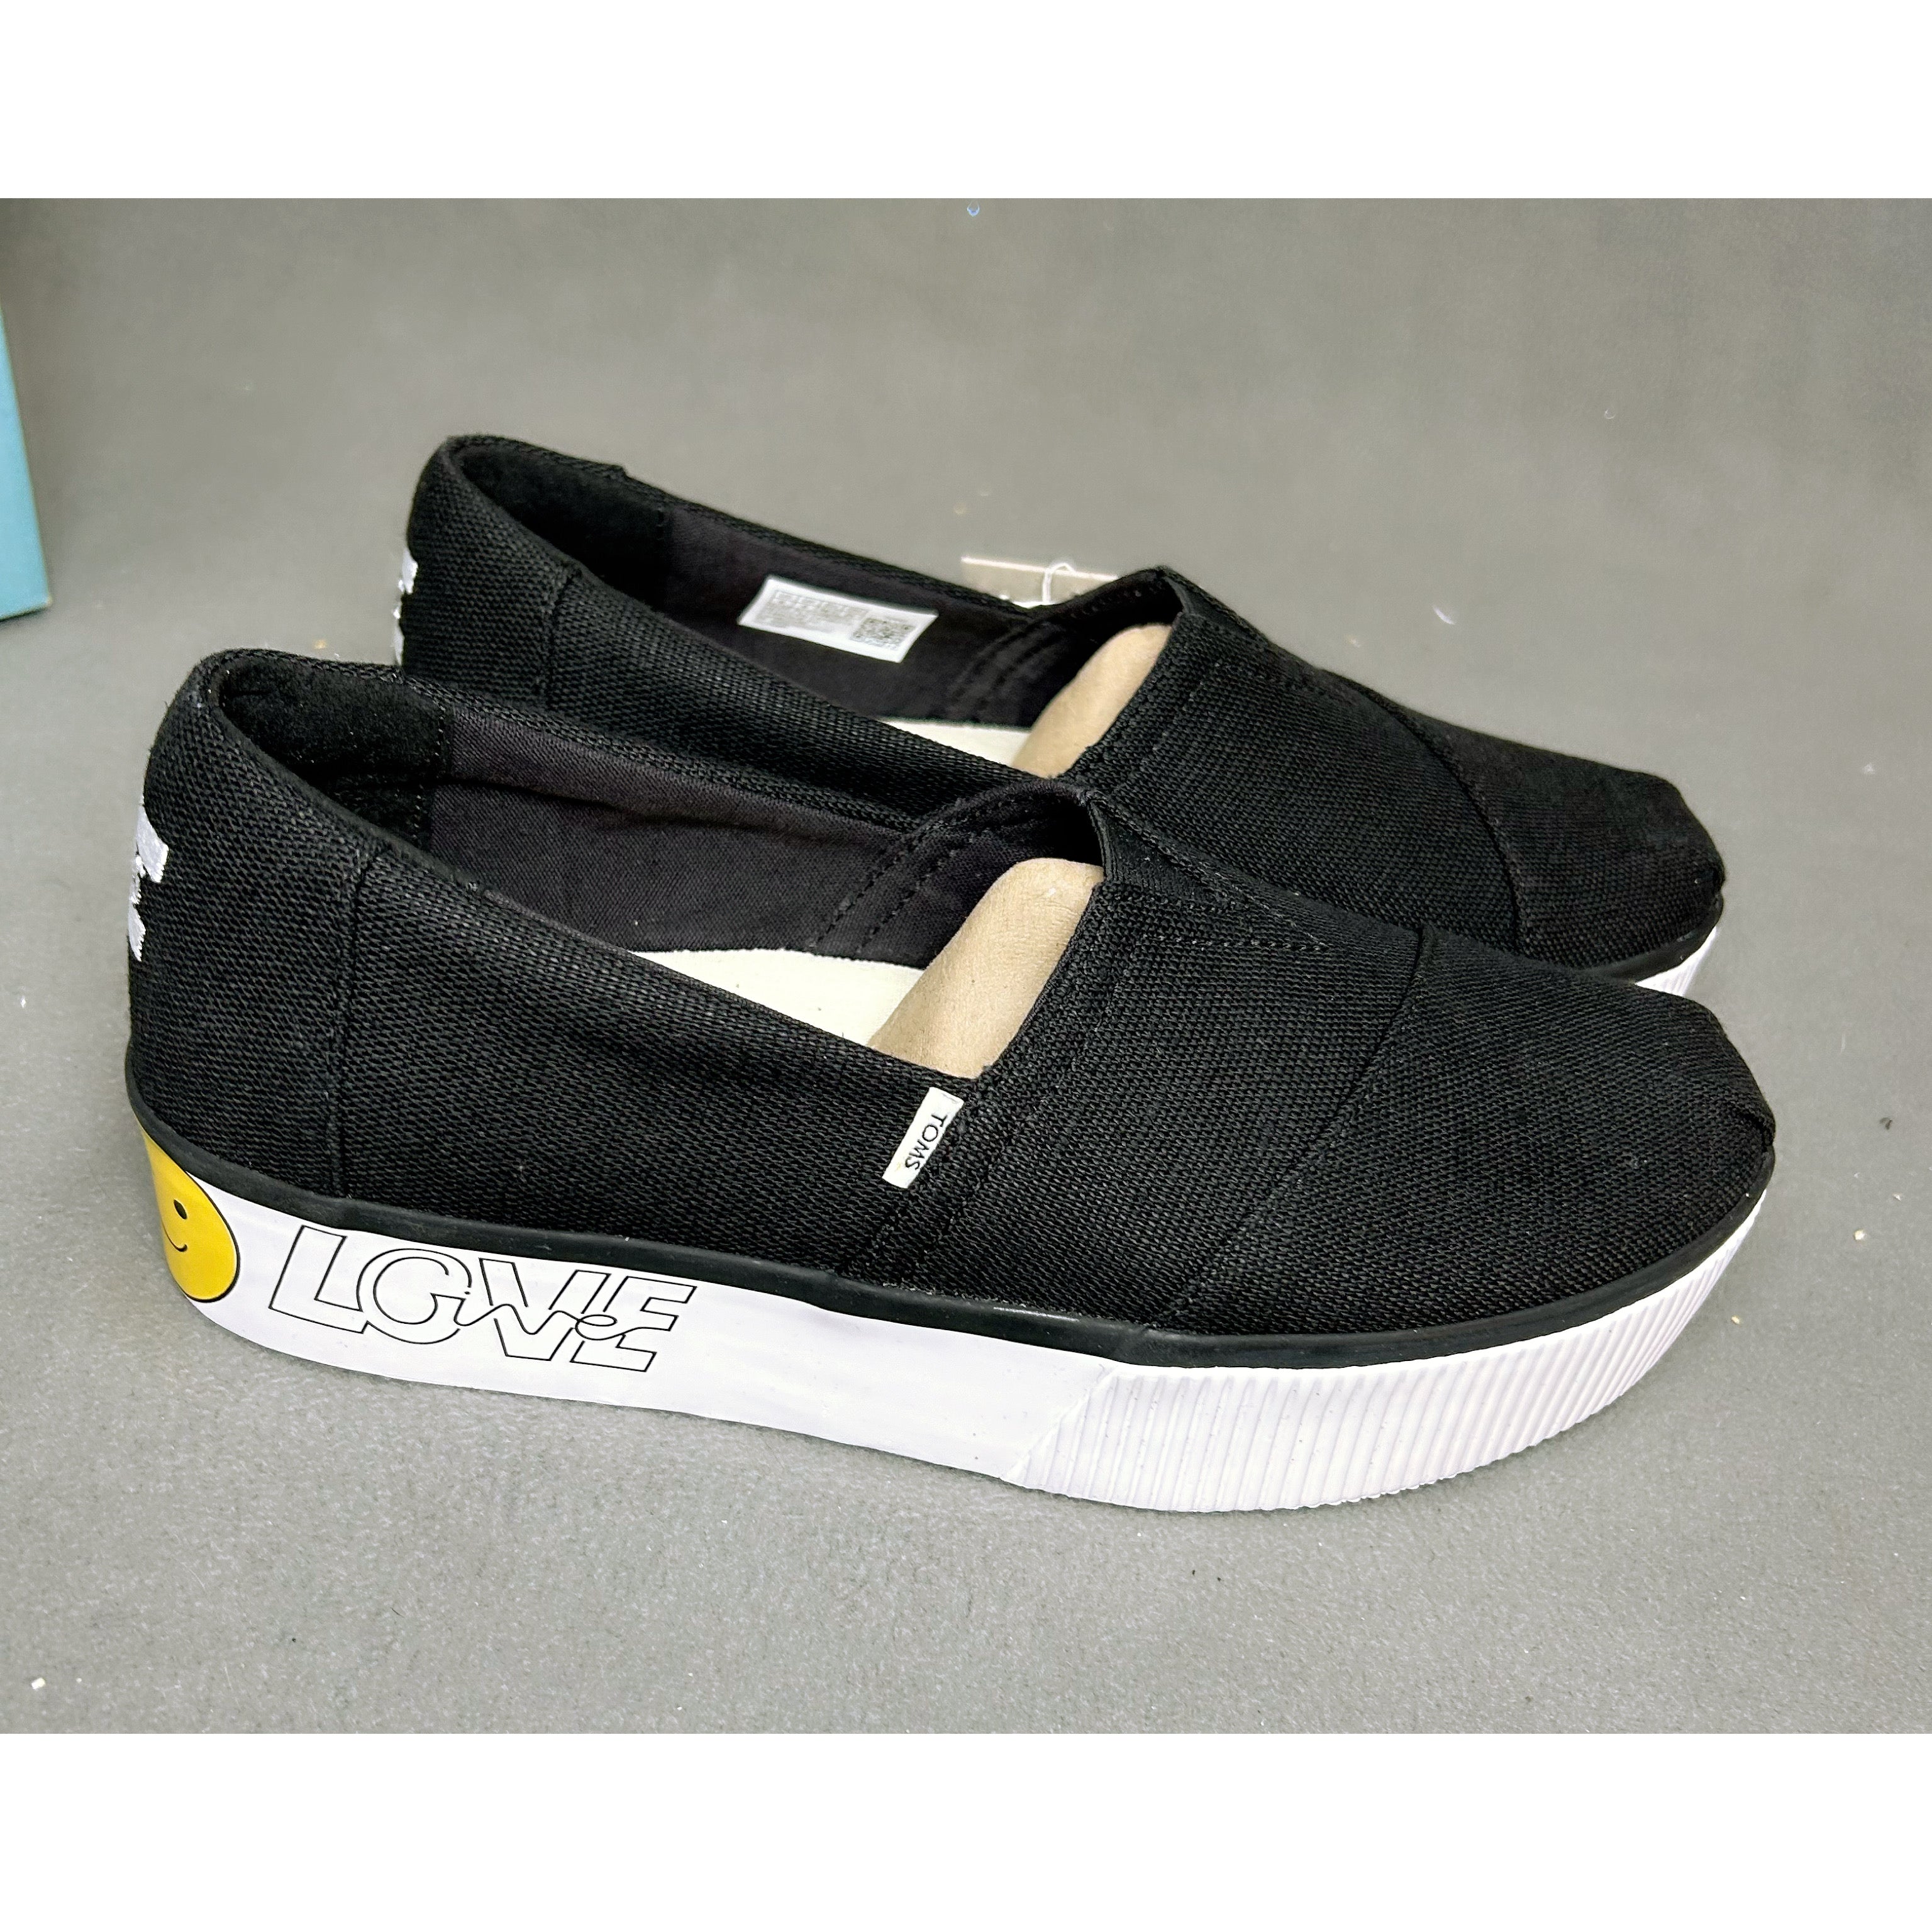 TOMS black Alpargata sneakers, size 8, NEW IN BOX!